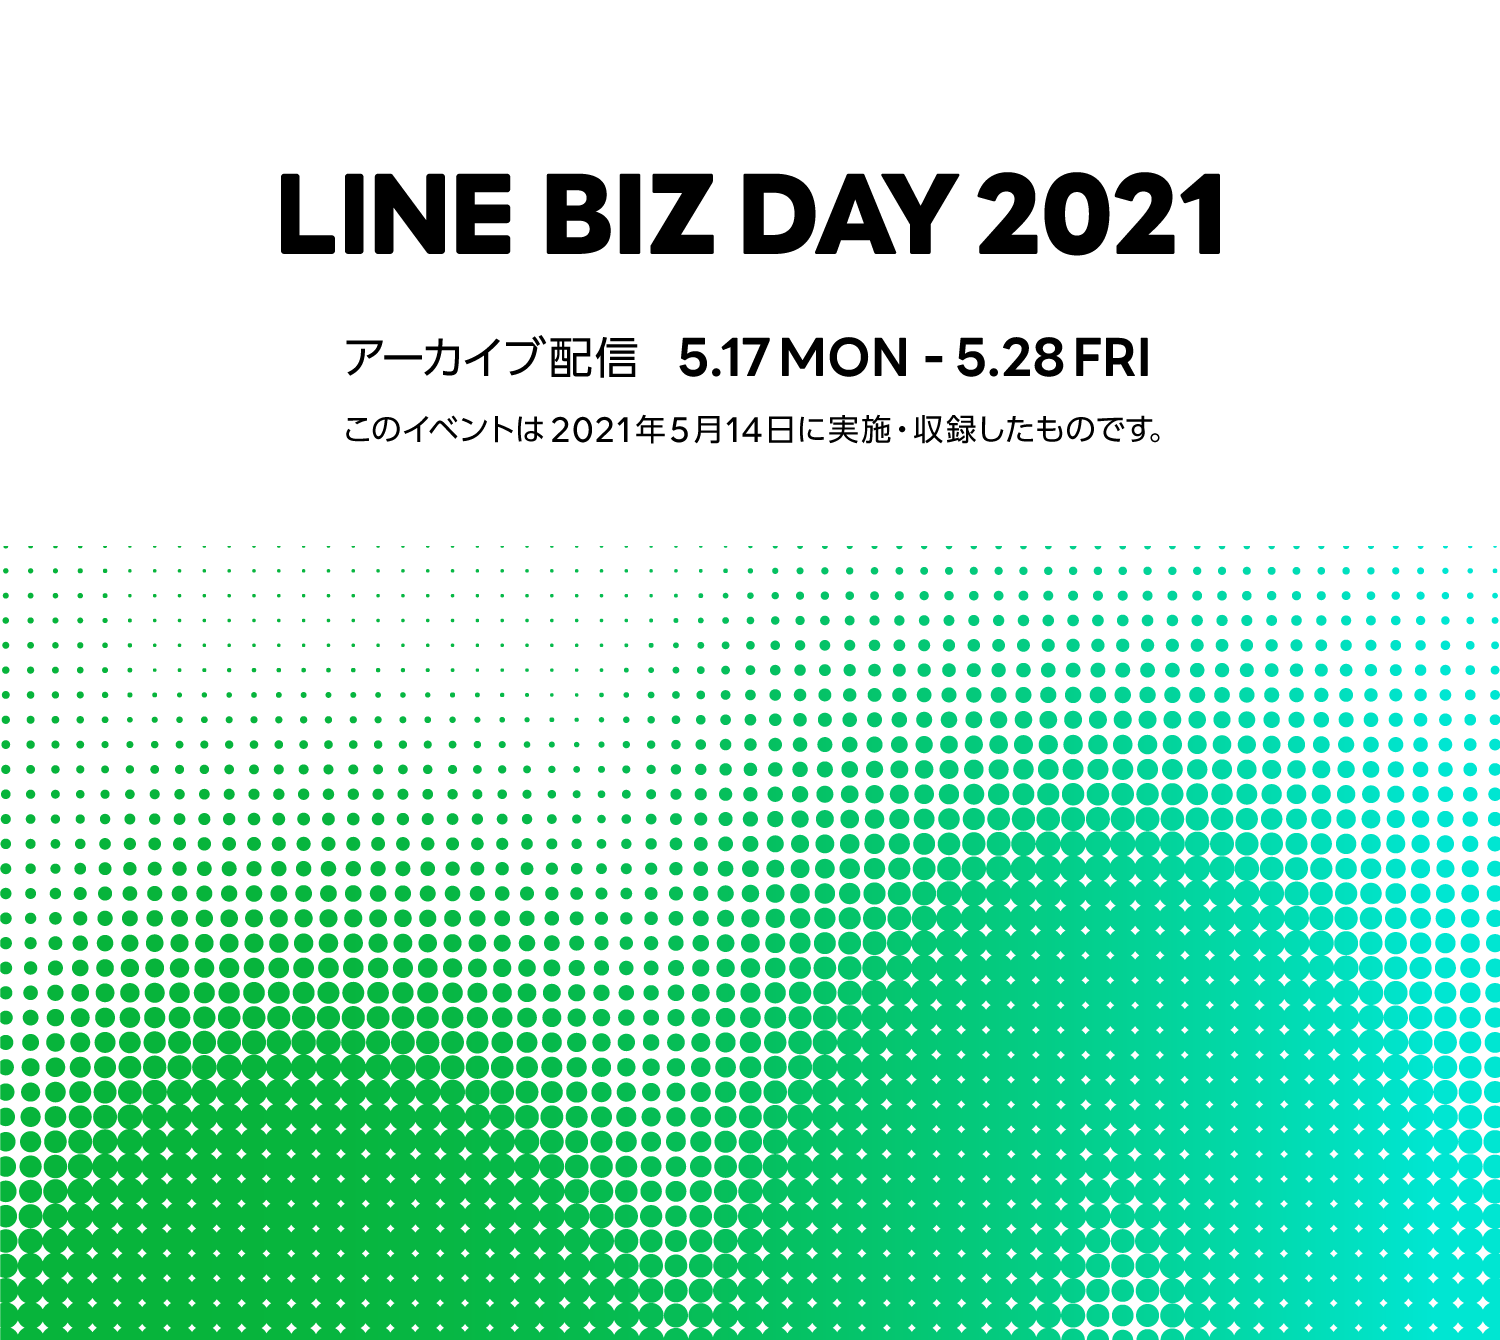 LINE BIZ DAY アーカイブ配信 2021 5.17 MON - 5.28 FRI